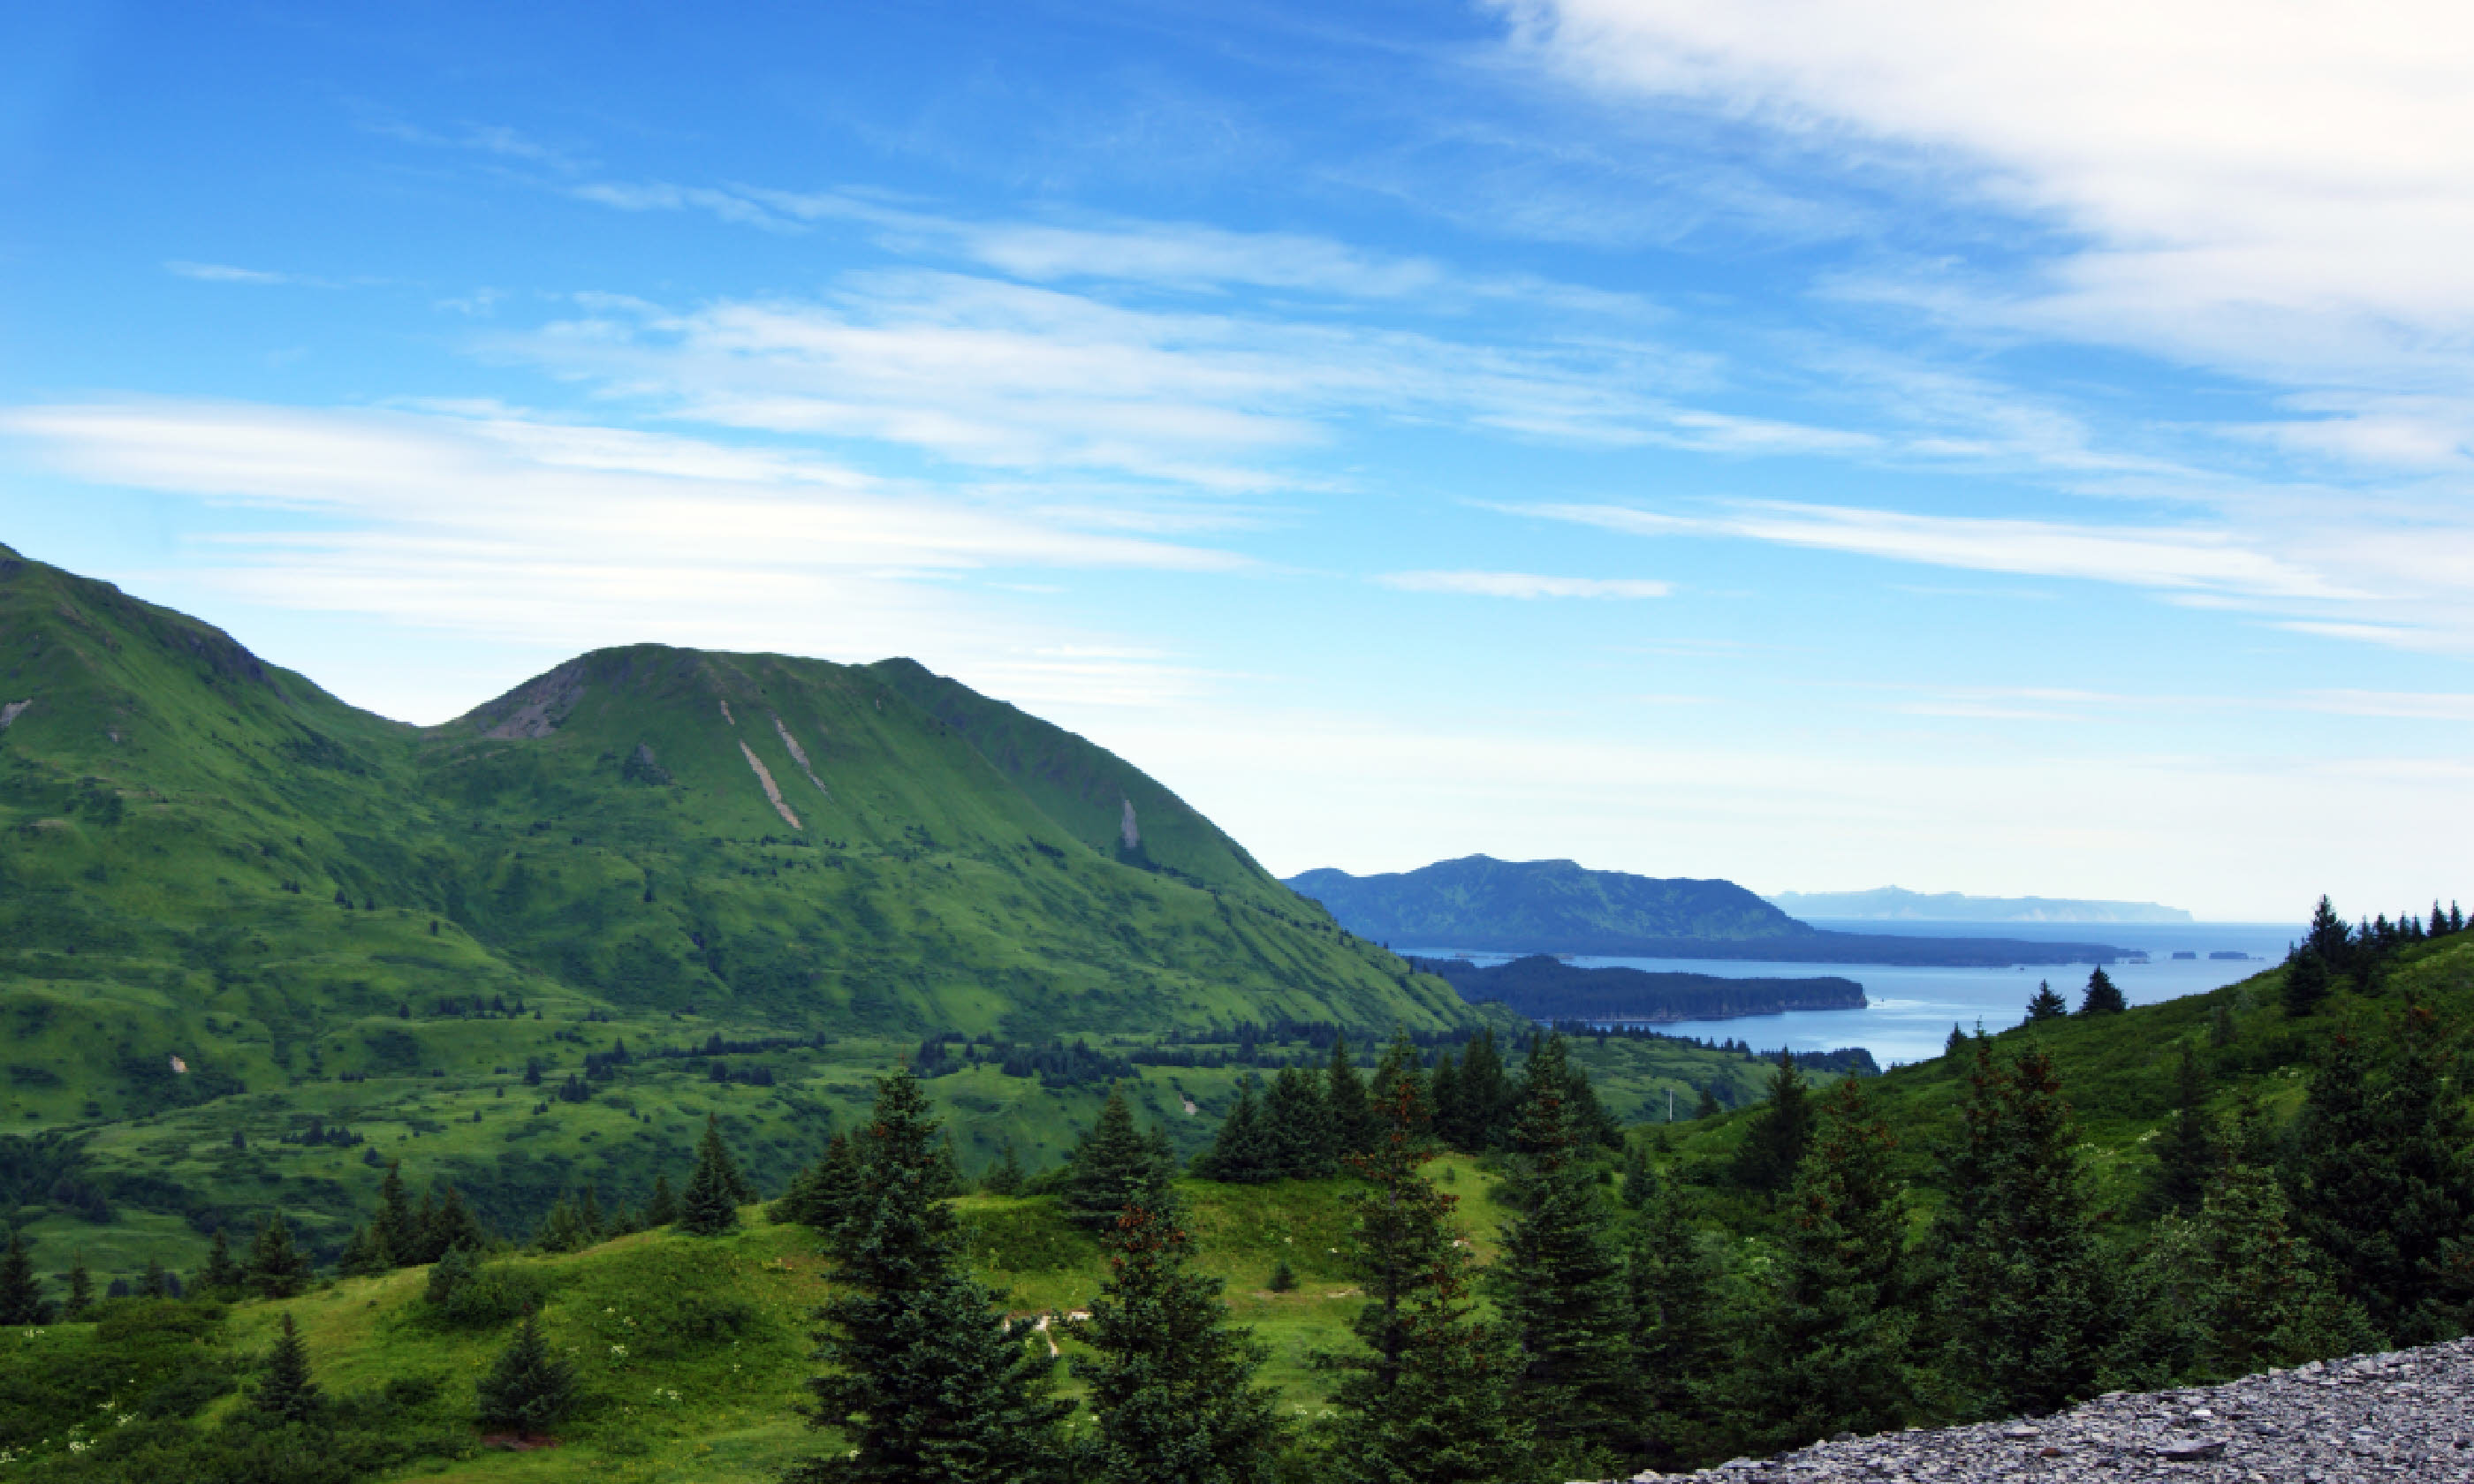 Kodiak Island (Shutterstock)